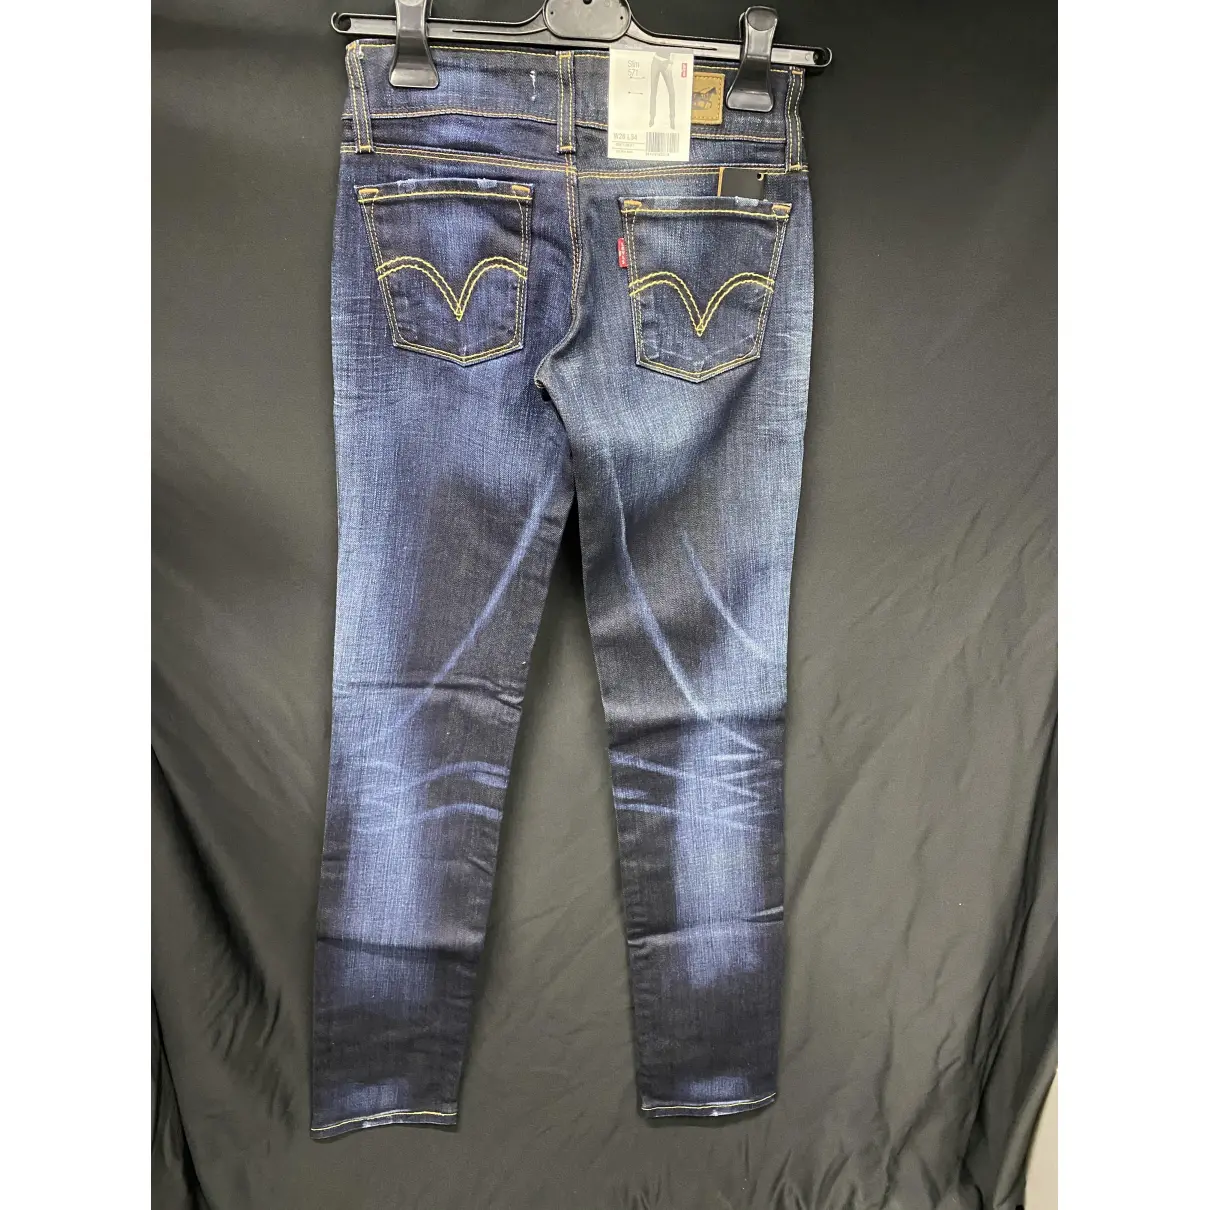 Buy Levi's Vintage Clothing Slim jeans online